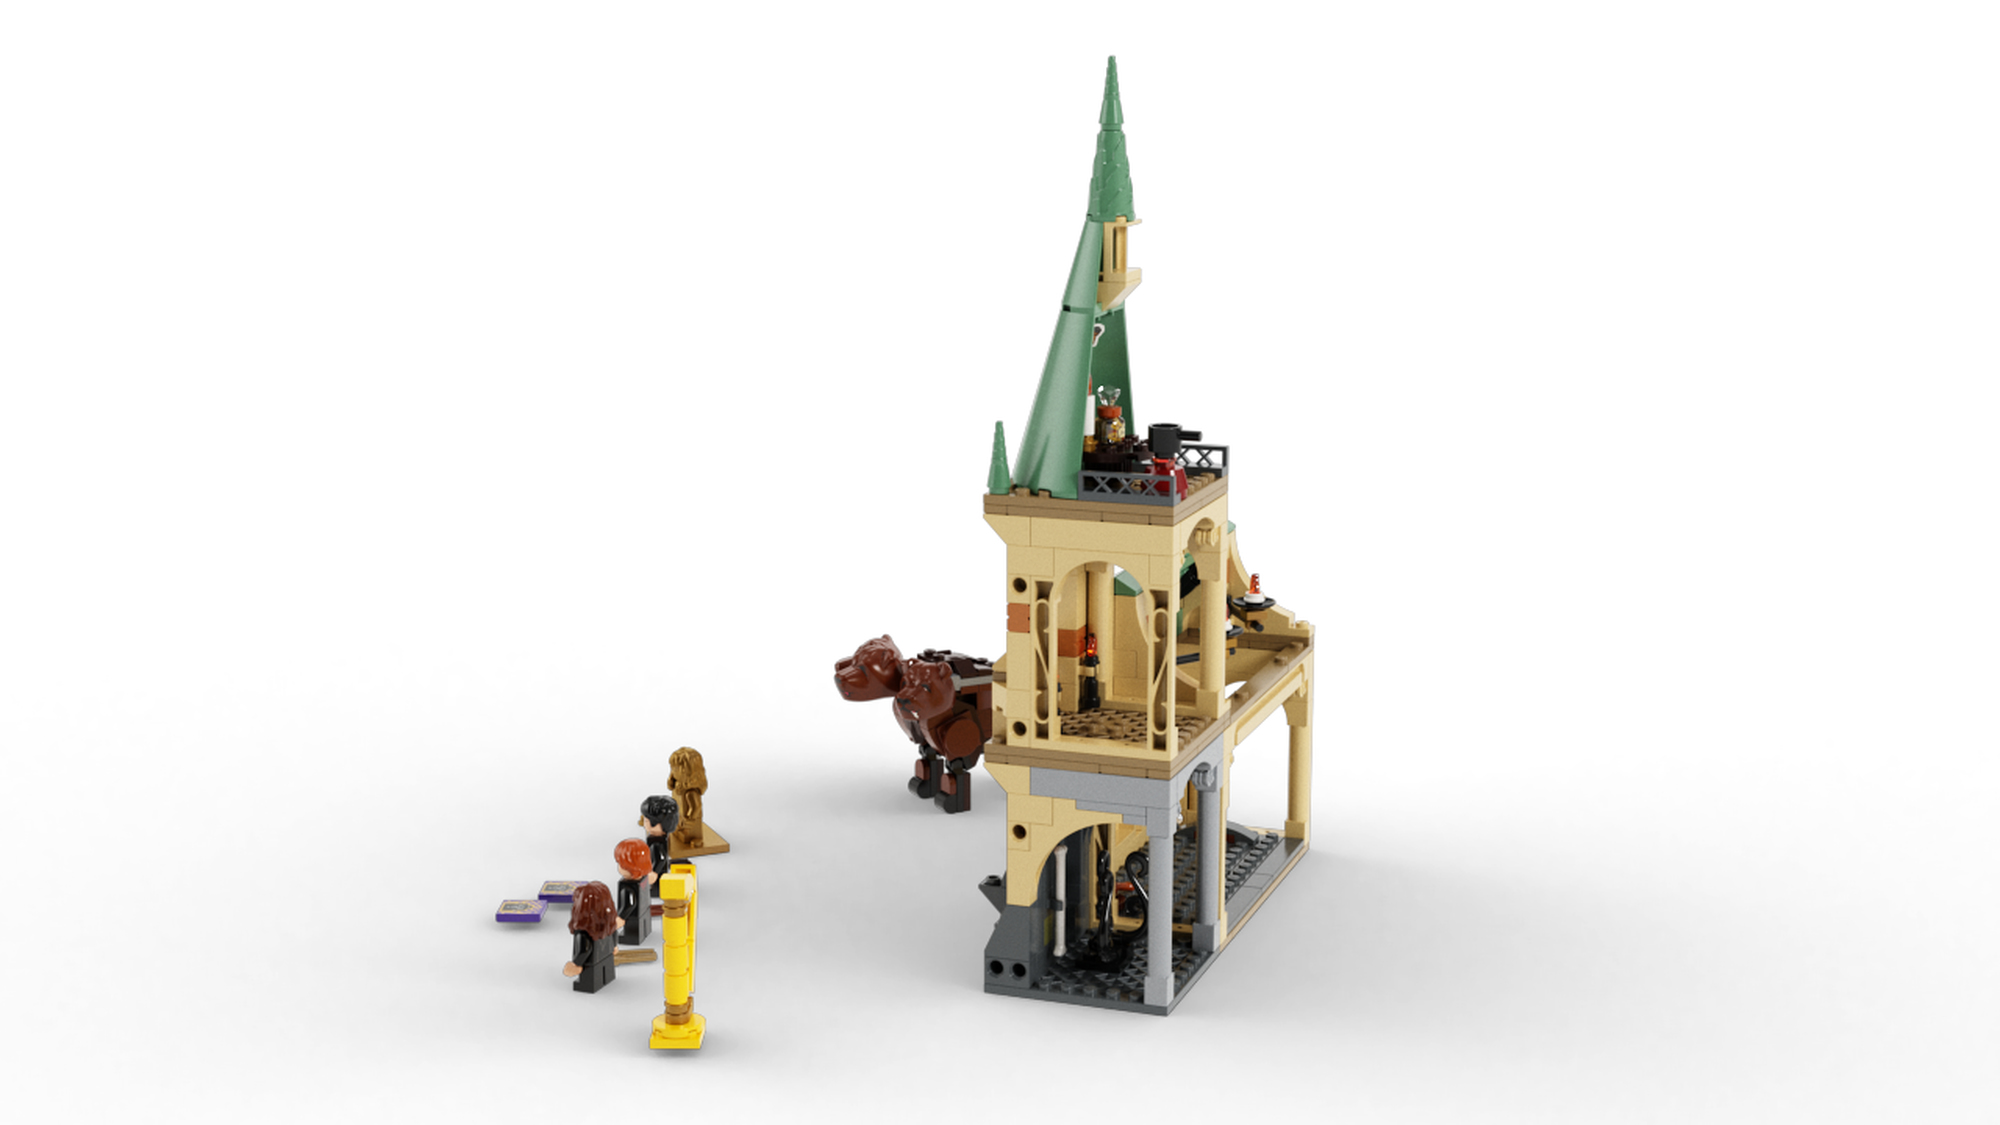 LEGO Harry Potter Hogwarts: Fluffy Encounter 76387 Kit de